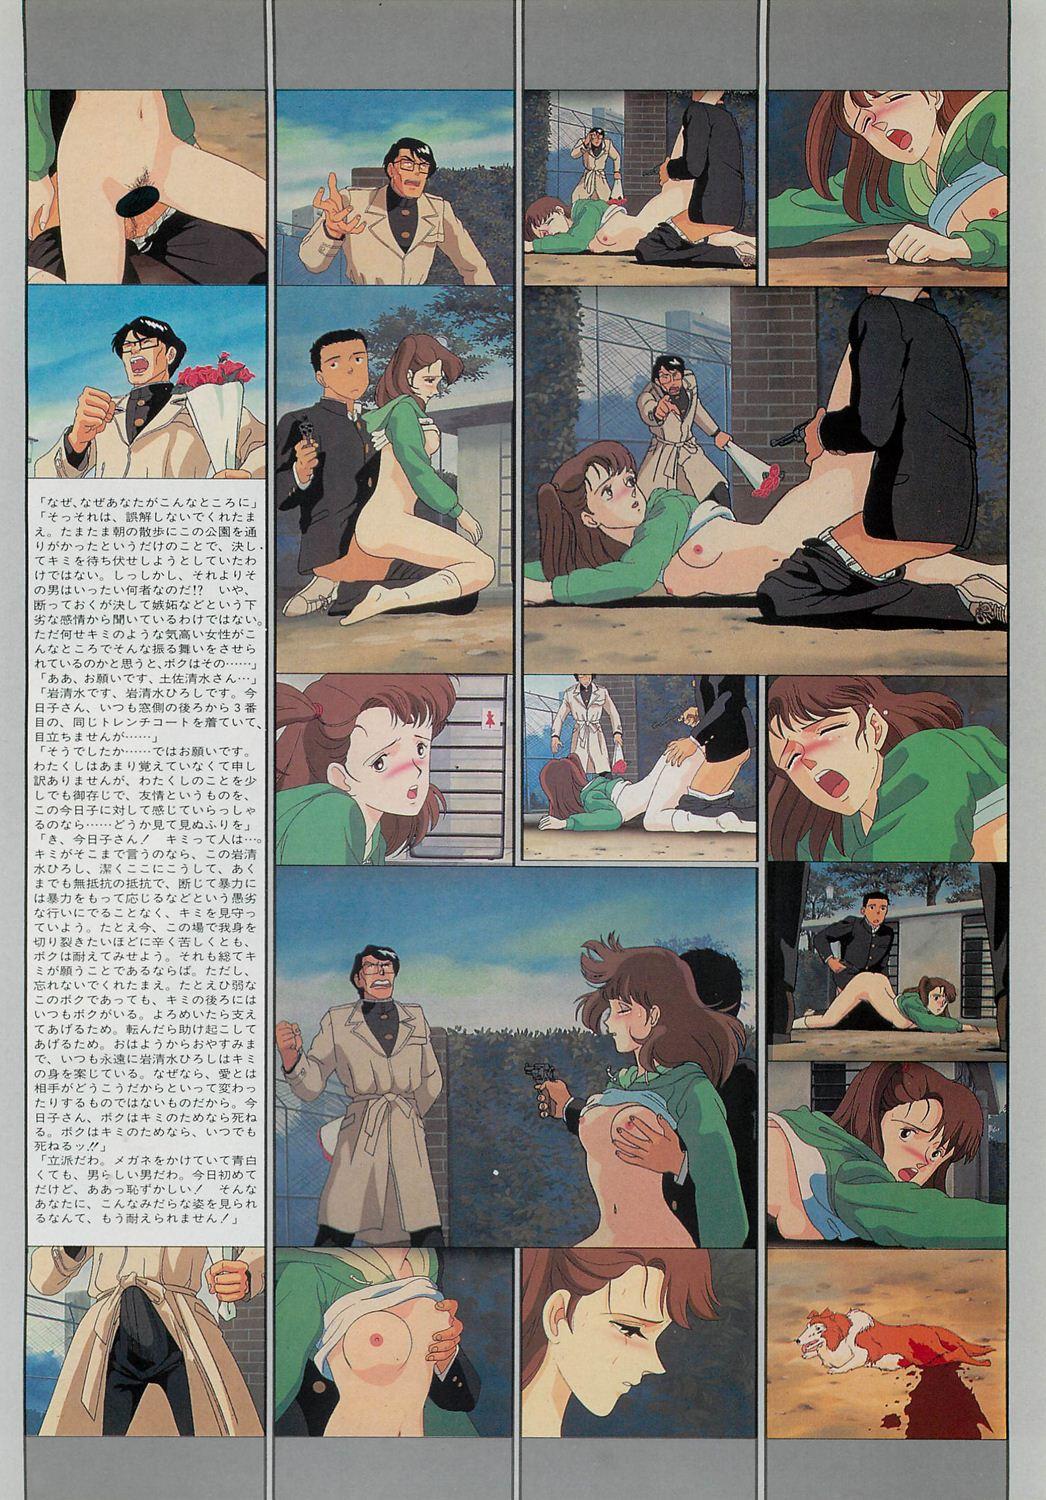 Cream Lemon Film Comics - To Moriyama Special "Soukamoshinnai 6